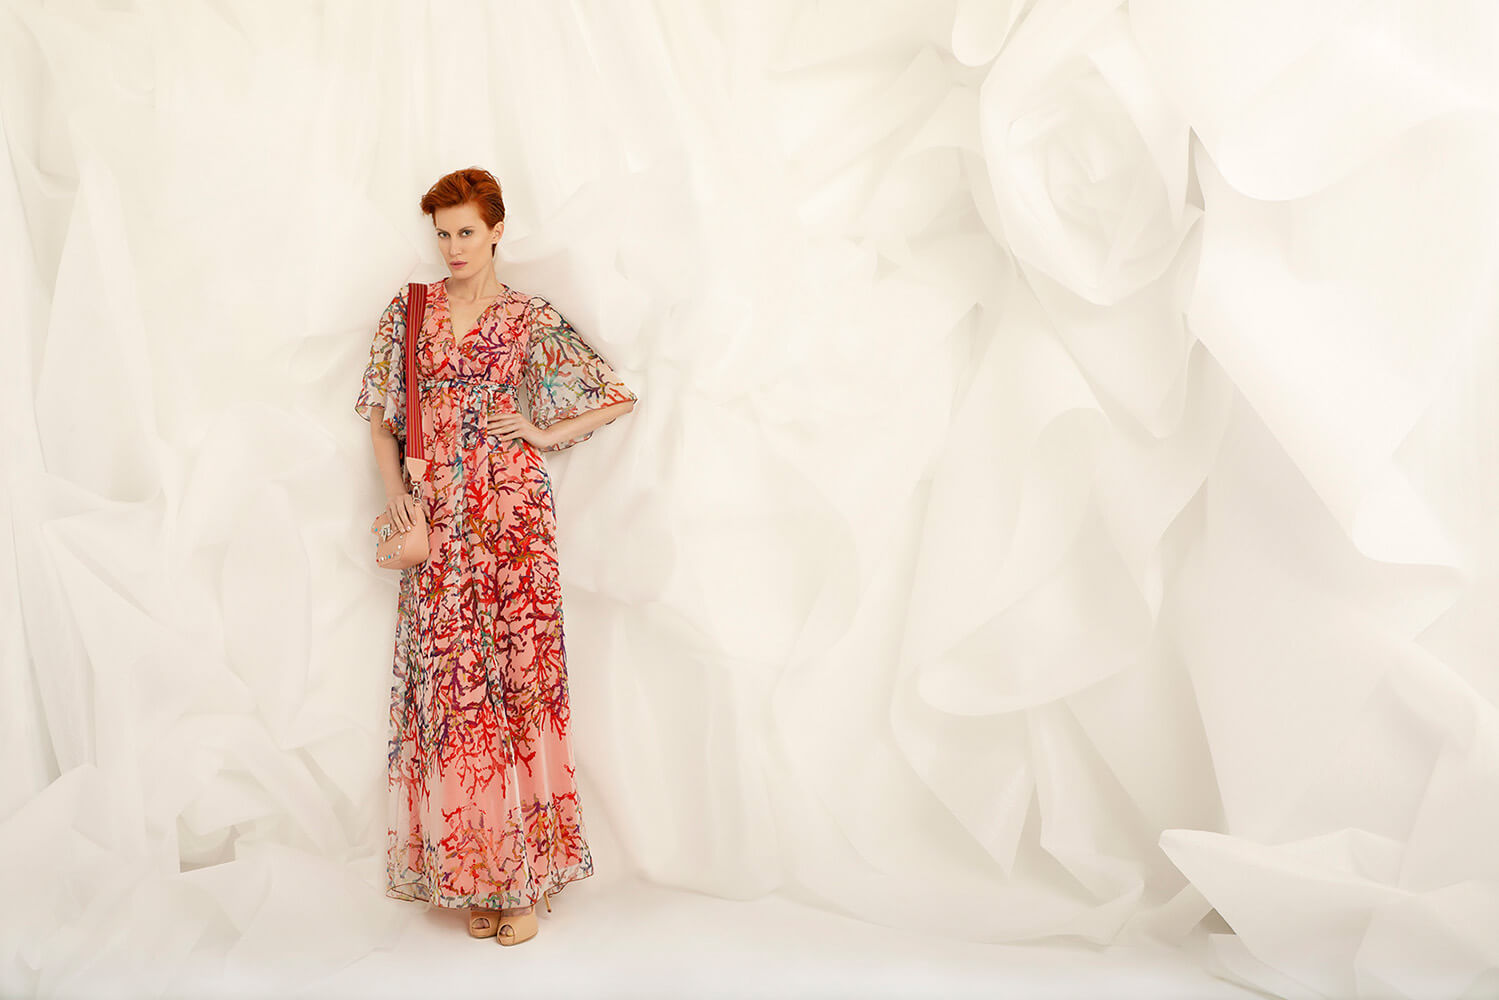 Angel-Ruiz-Ruiz-Fashion-Photographer-Campaign-SS-2017-k-kou-Madrid-Coral-Printed-Dress-1499x1000